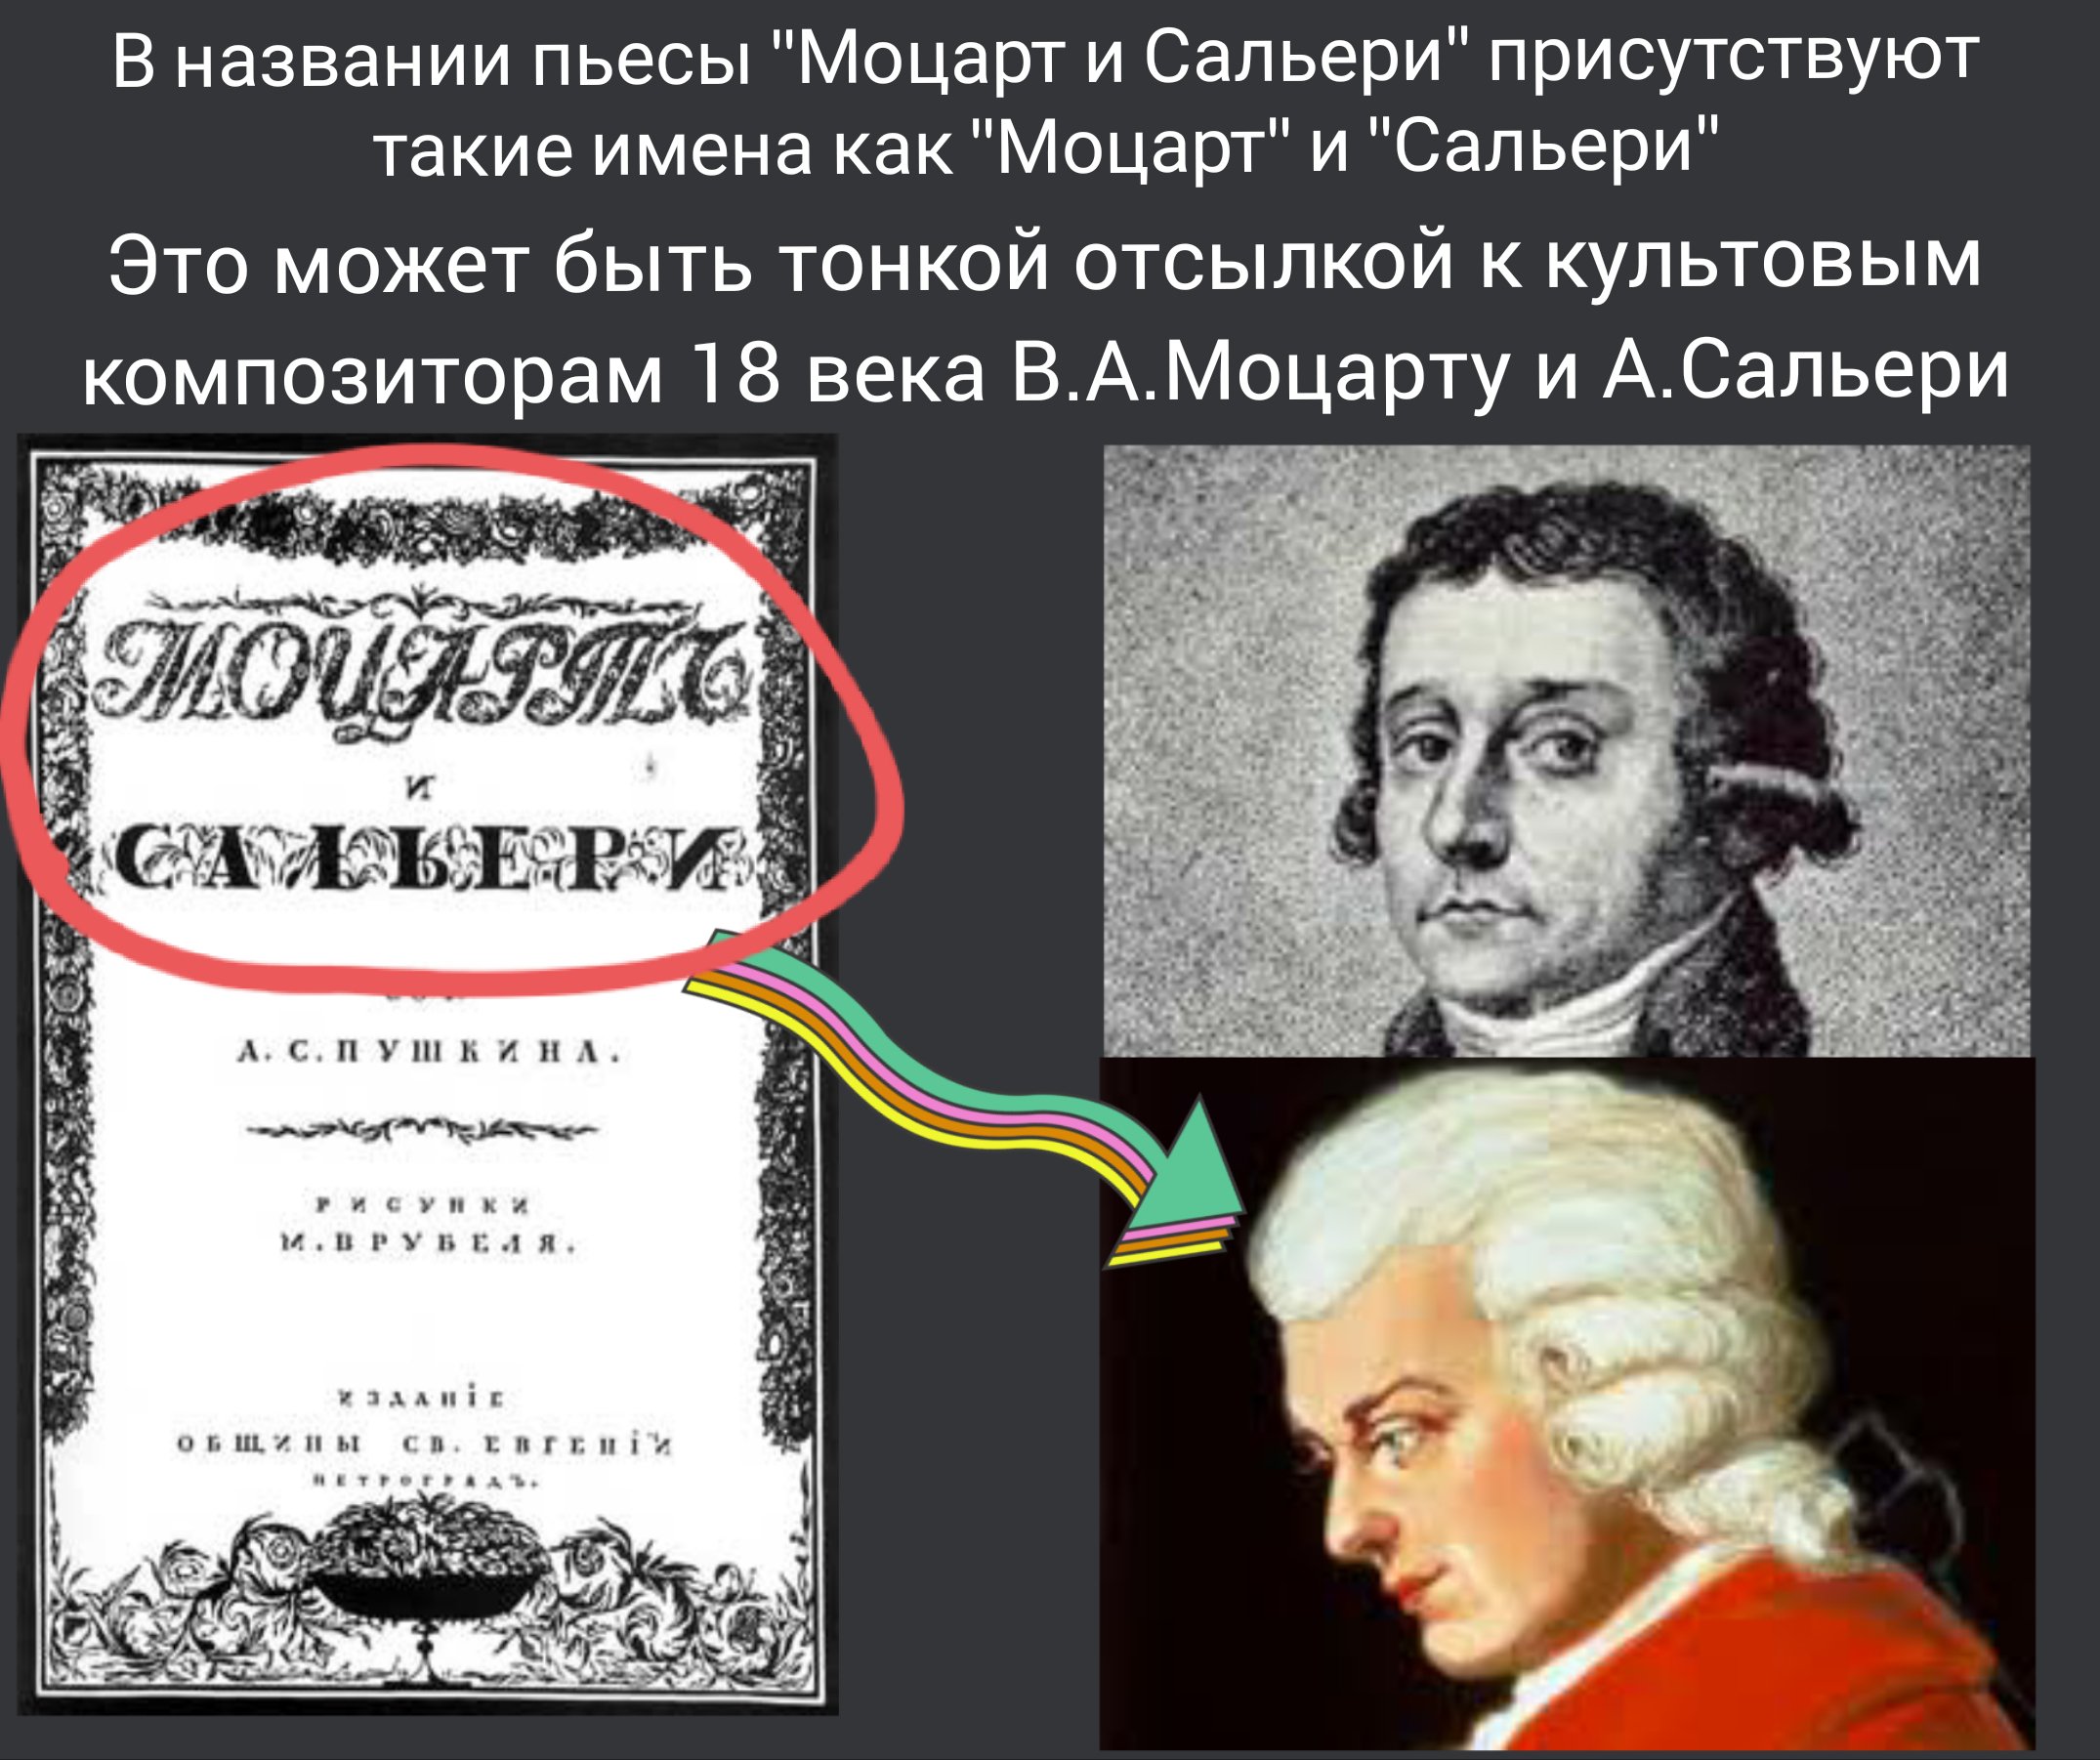 Сальери отравил Моцарта